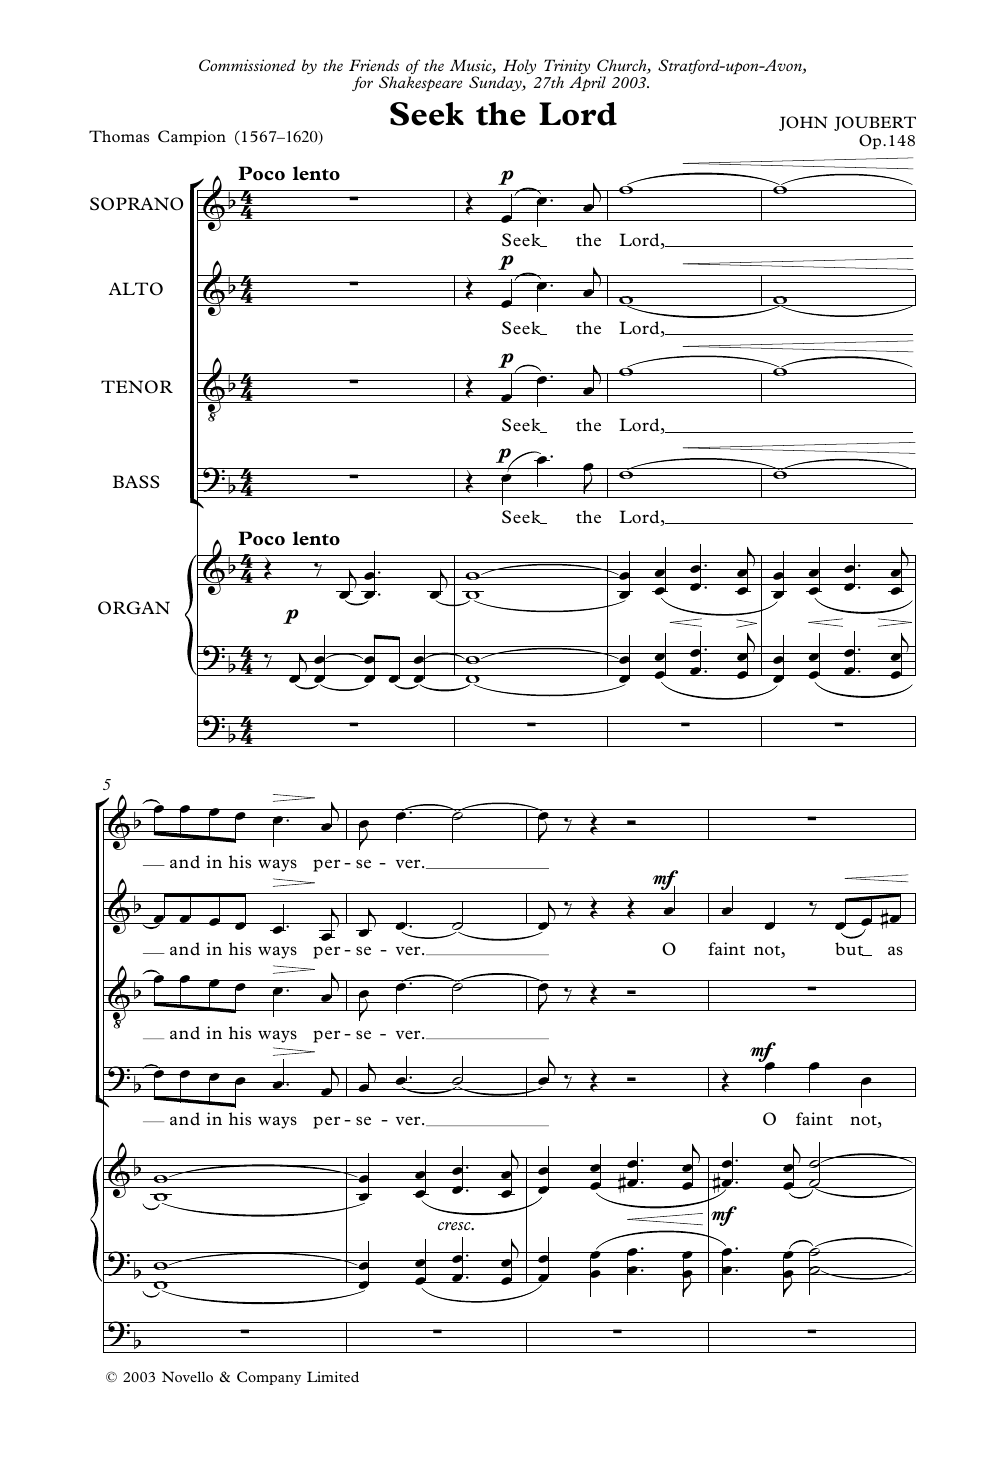 John Joubert Seek The Lord Sheet Music Notes & Chords for Choir - Download or Print PDF